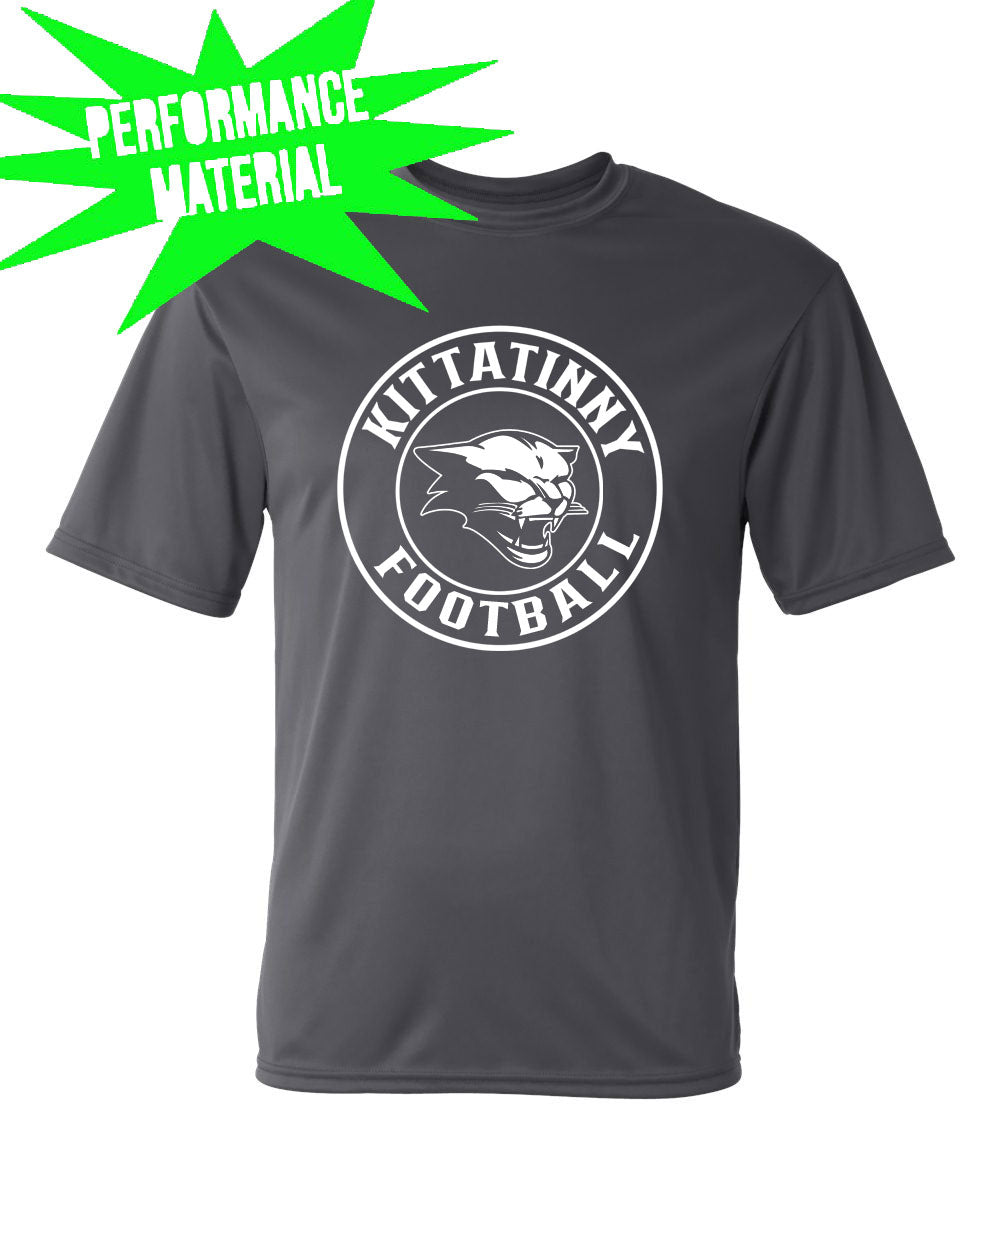 Kittatinny Football Performance Material design 5 T-Shirt